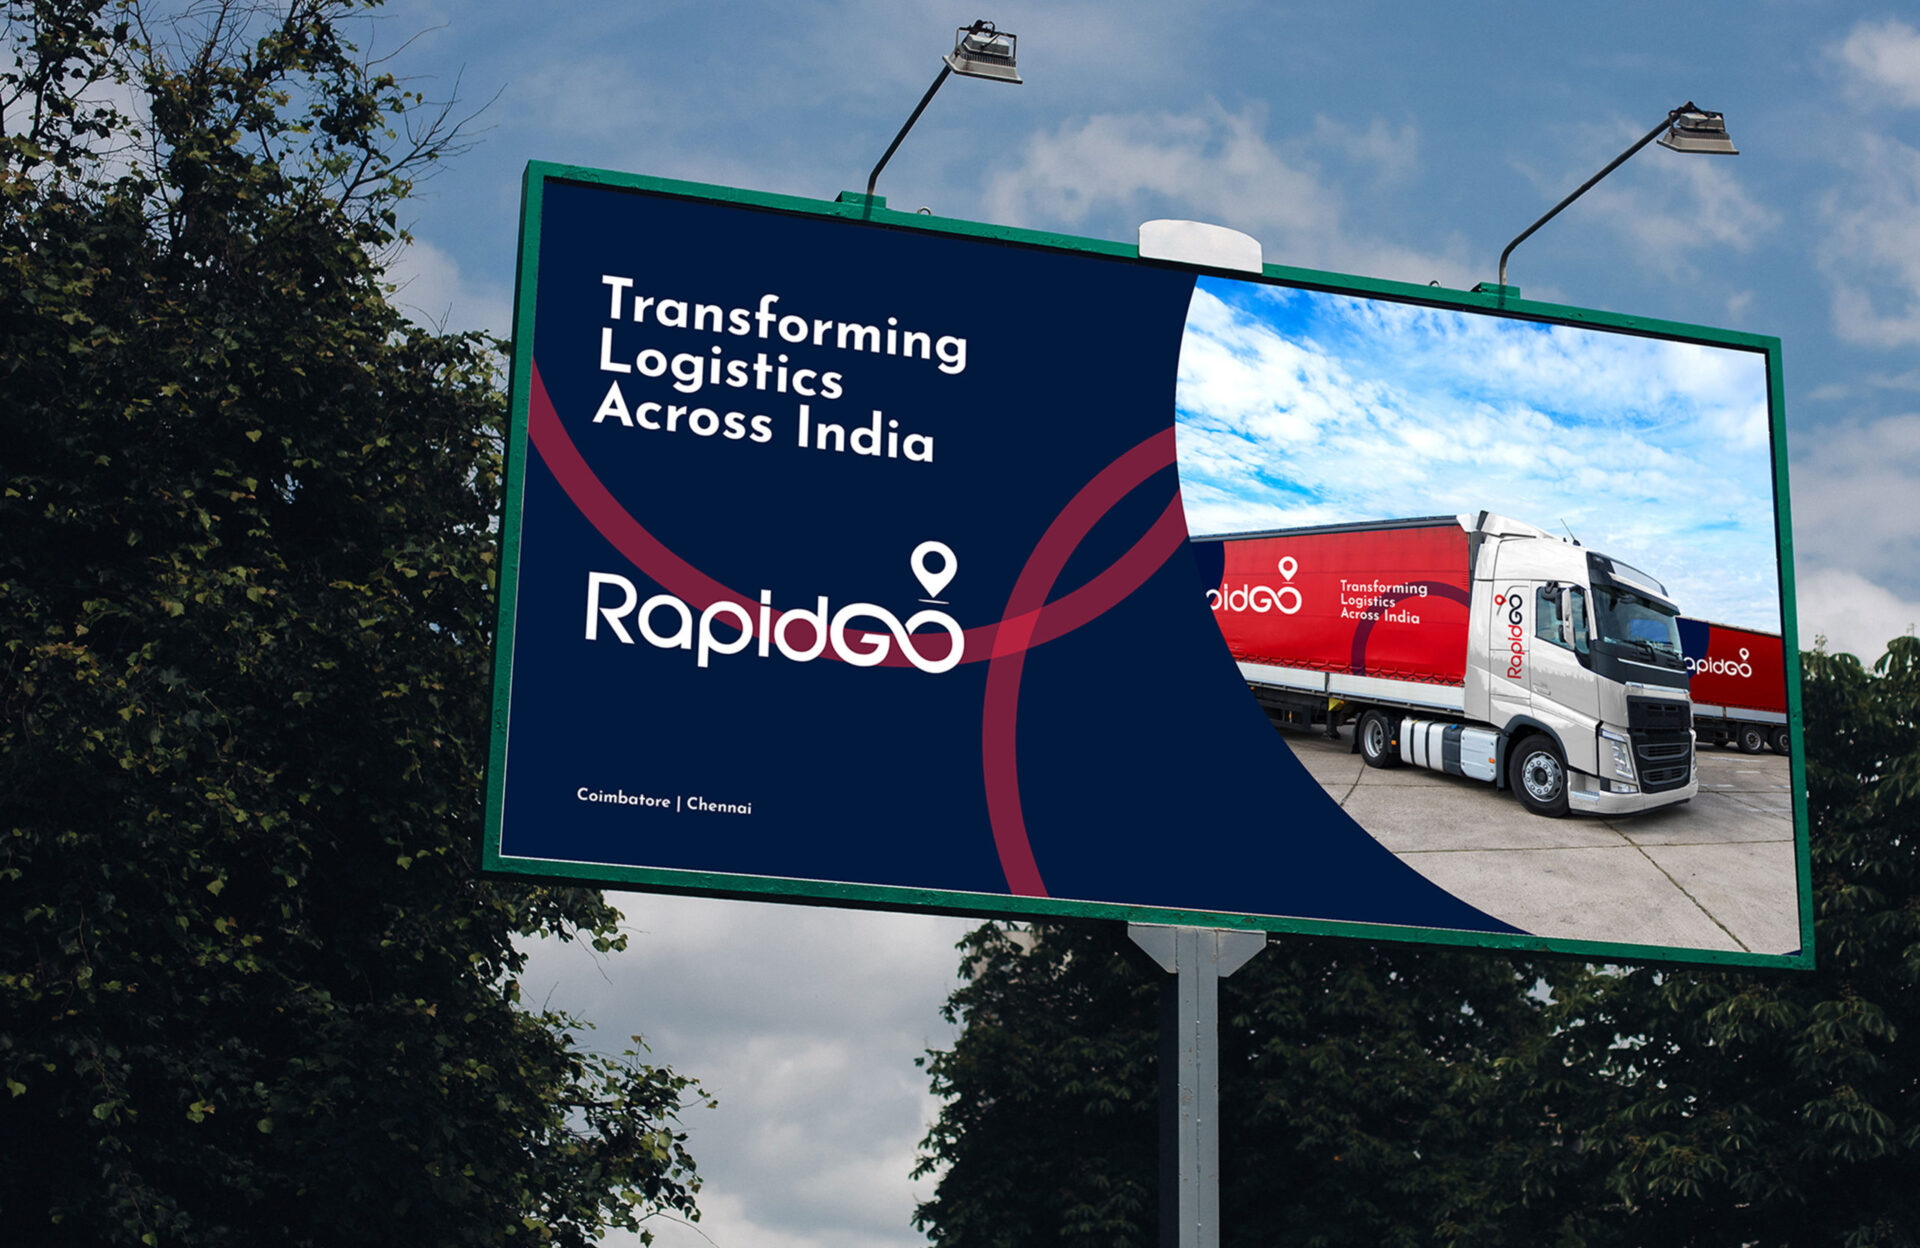 outdoor-billboard-signboard-advertising-branding-agency-logistics-service-company-reinaphics-chennai